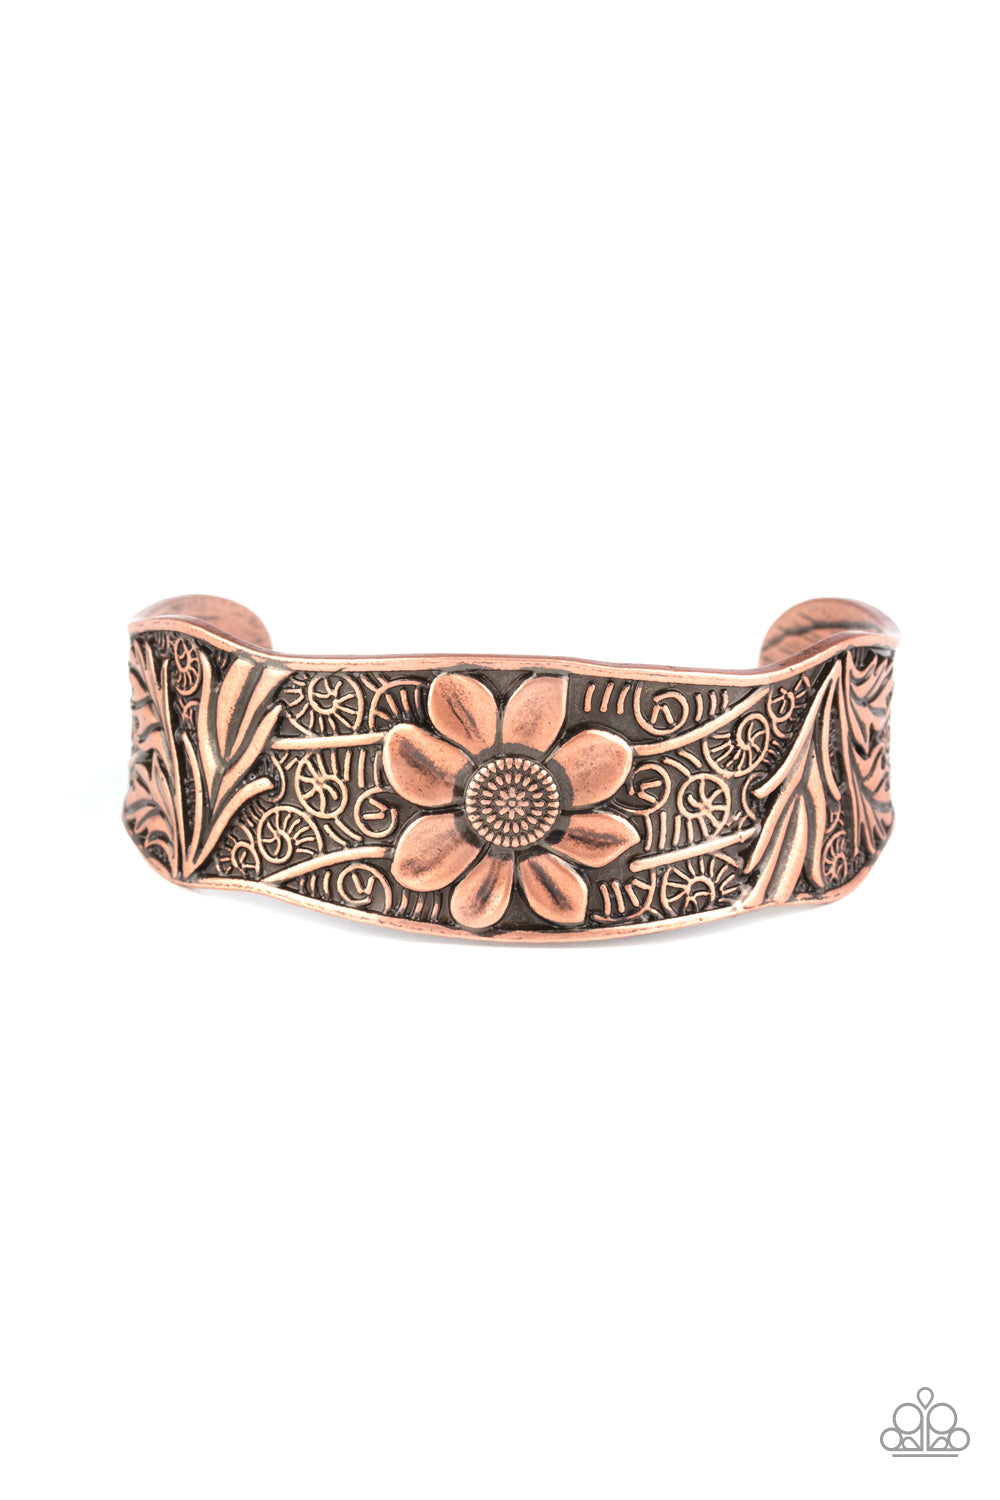 Paparazzi Daisy Paradise Copper Bracelet. # P9WH-CPXX-114XX. Free shipping. Floral Cuff $5 bracelet